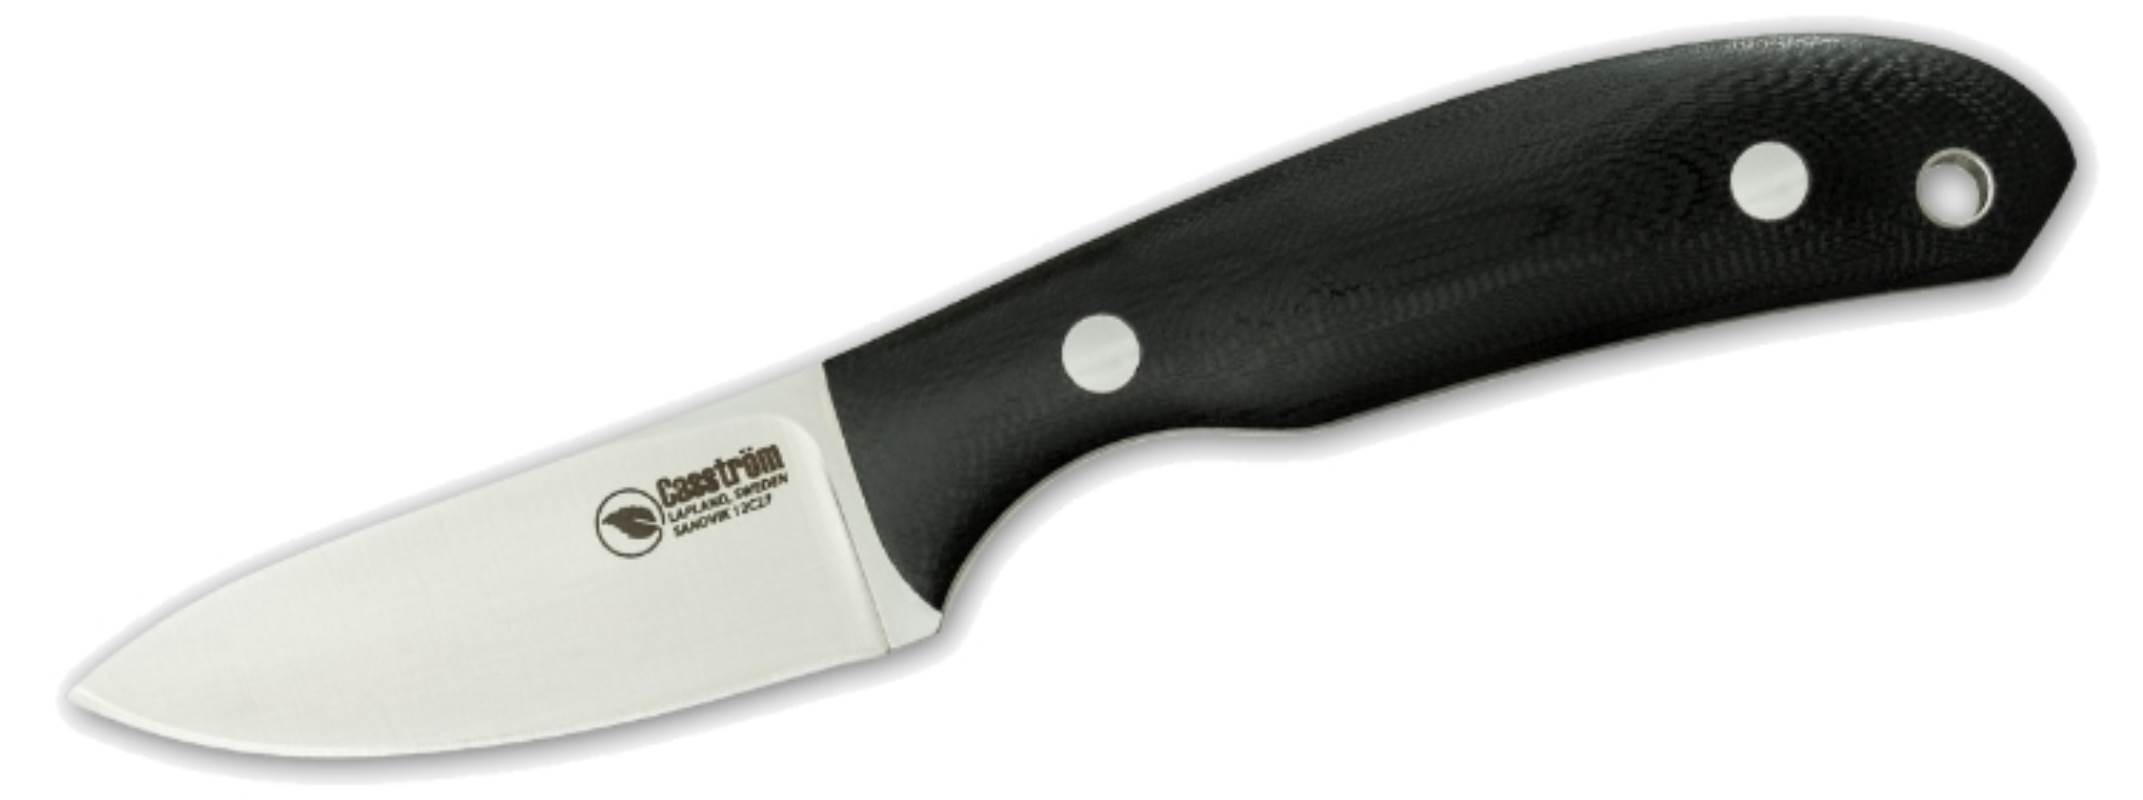 Safari Black G10 Knife